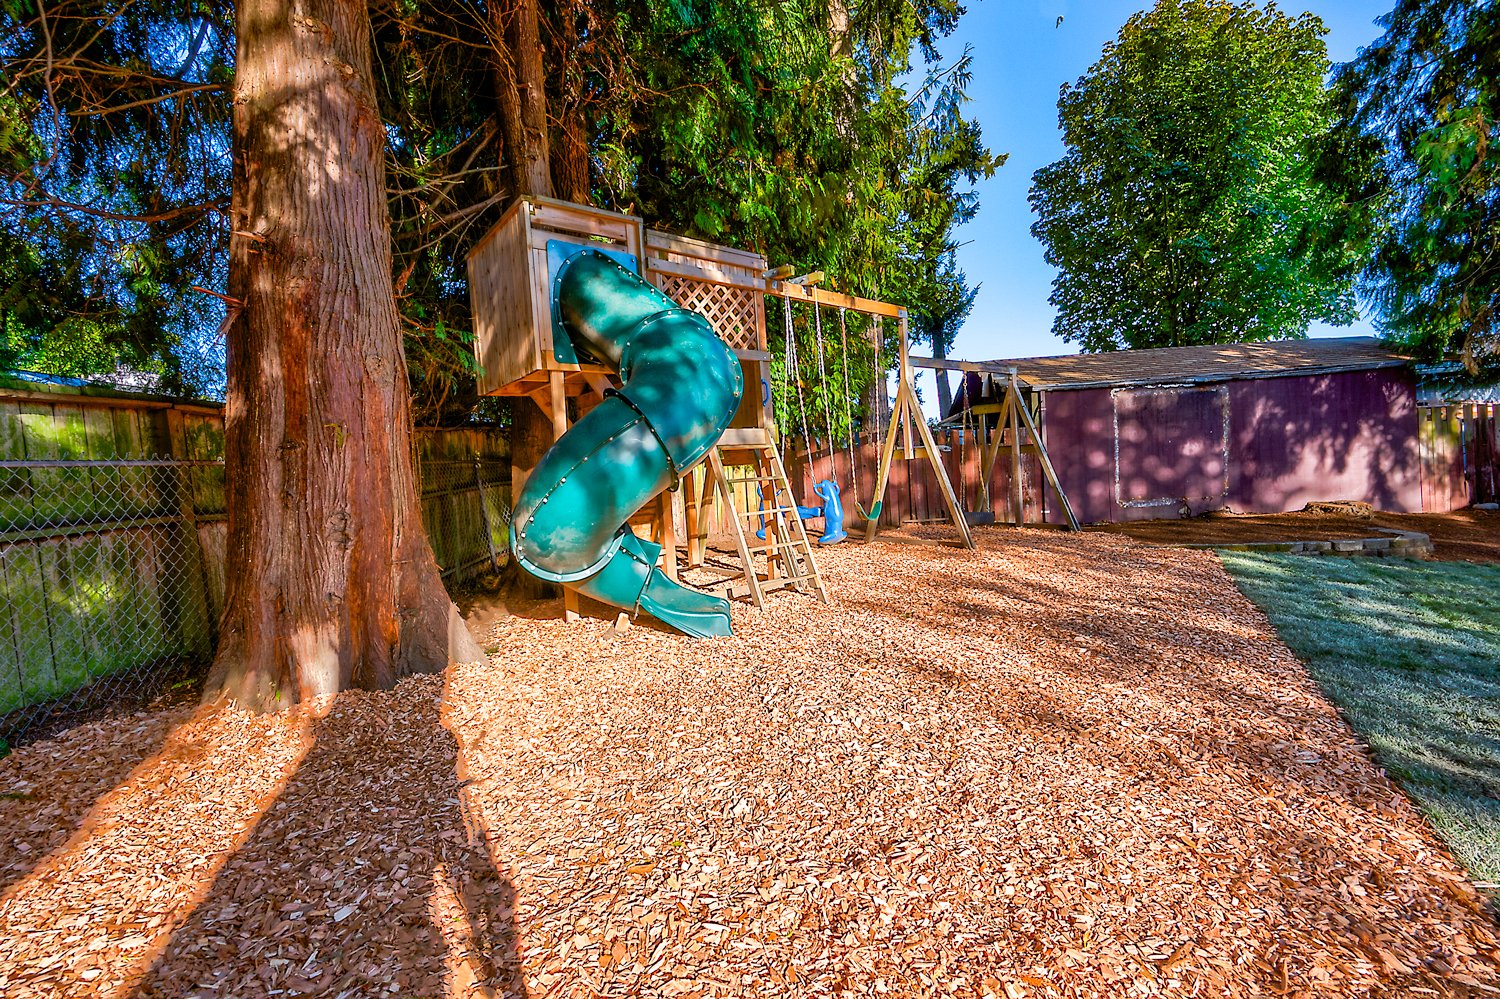 20b-backyard-play-toy.jpg